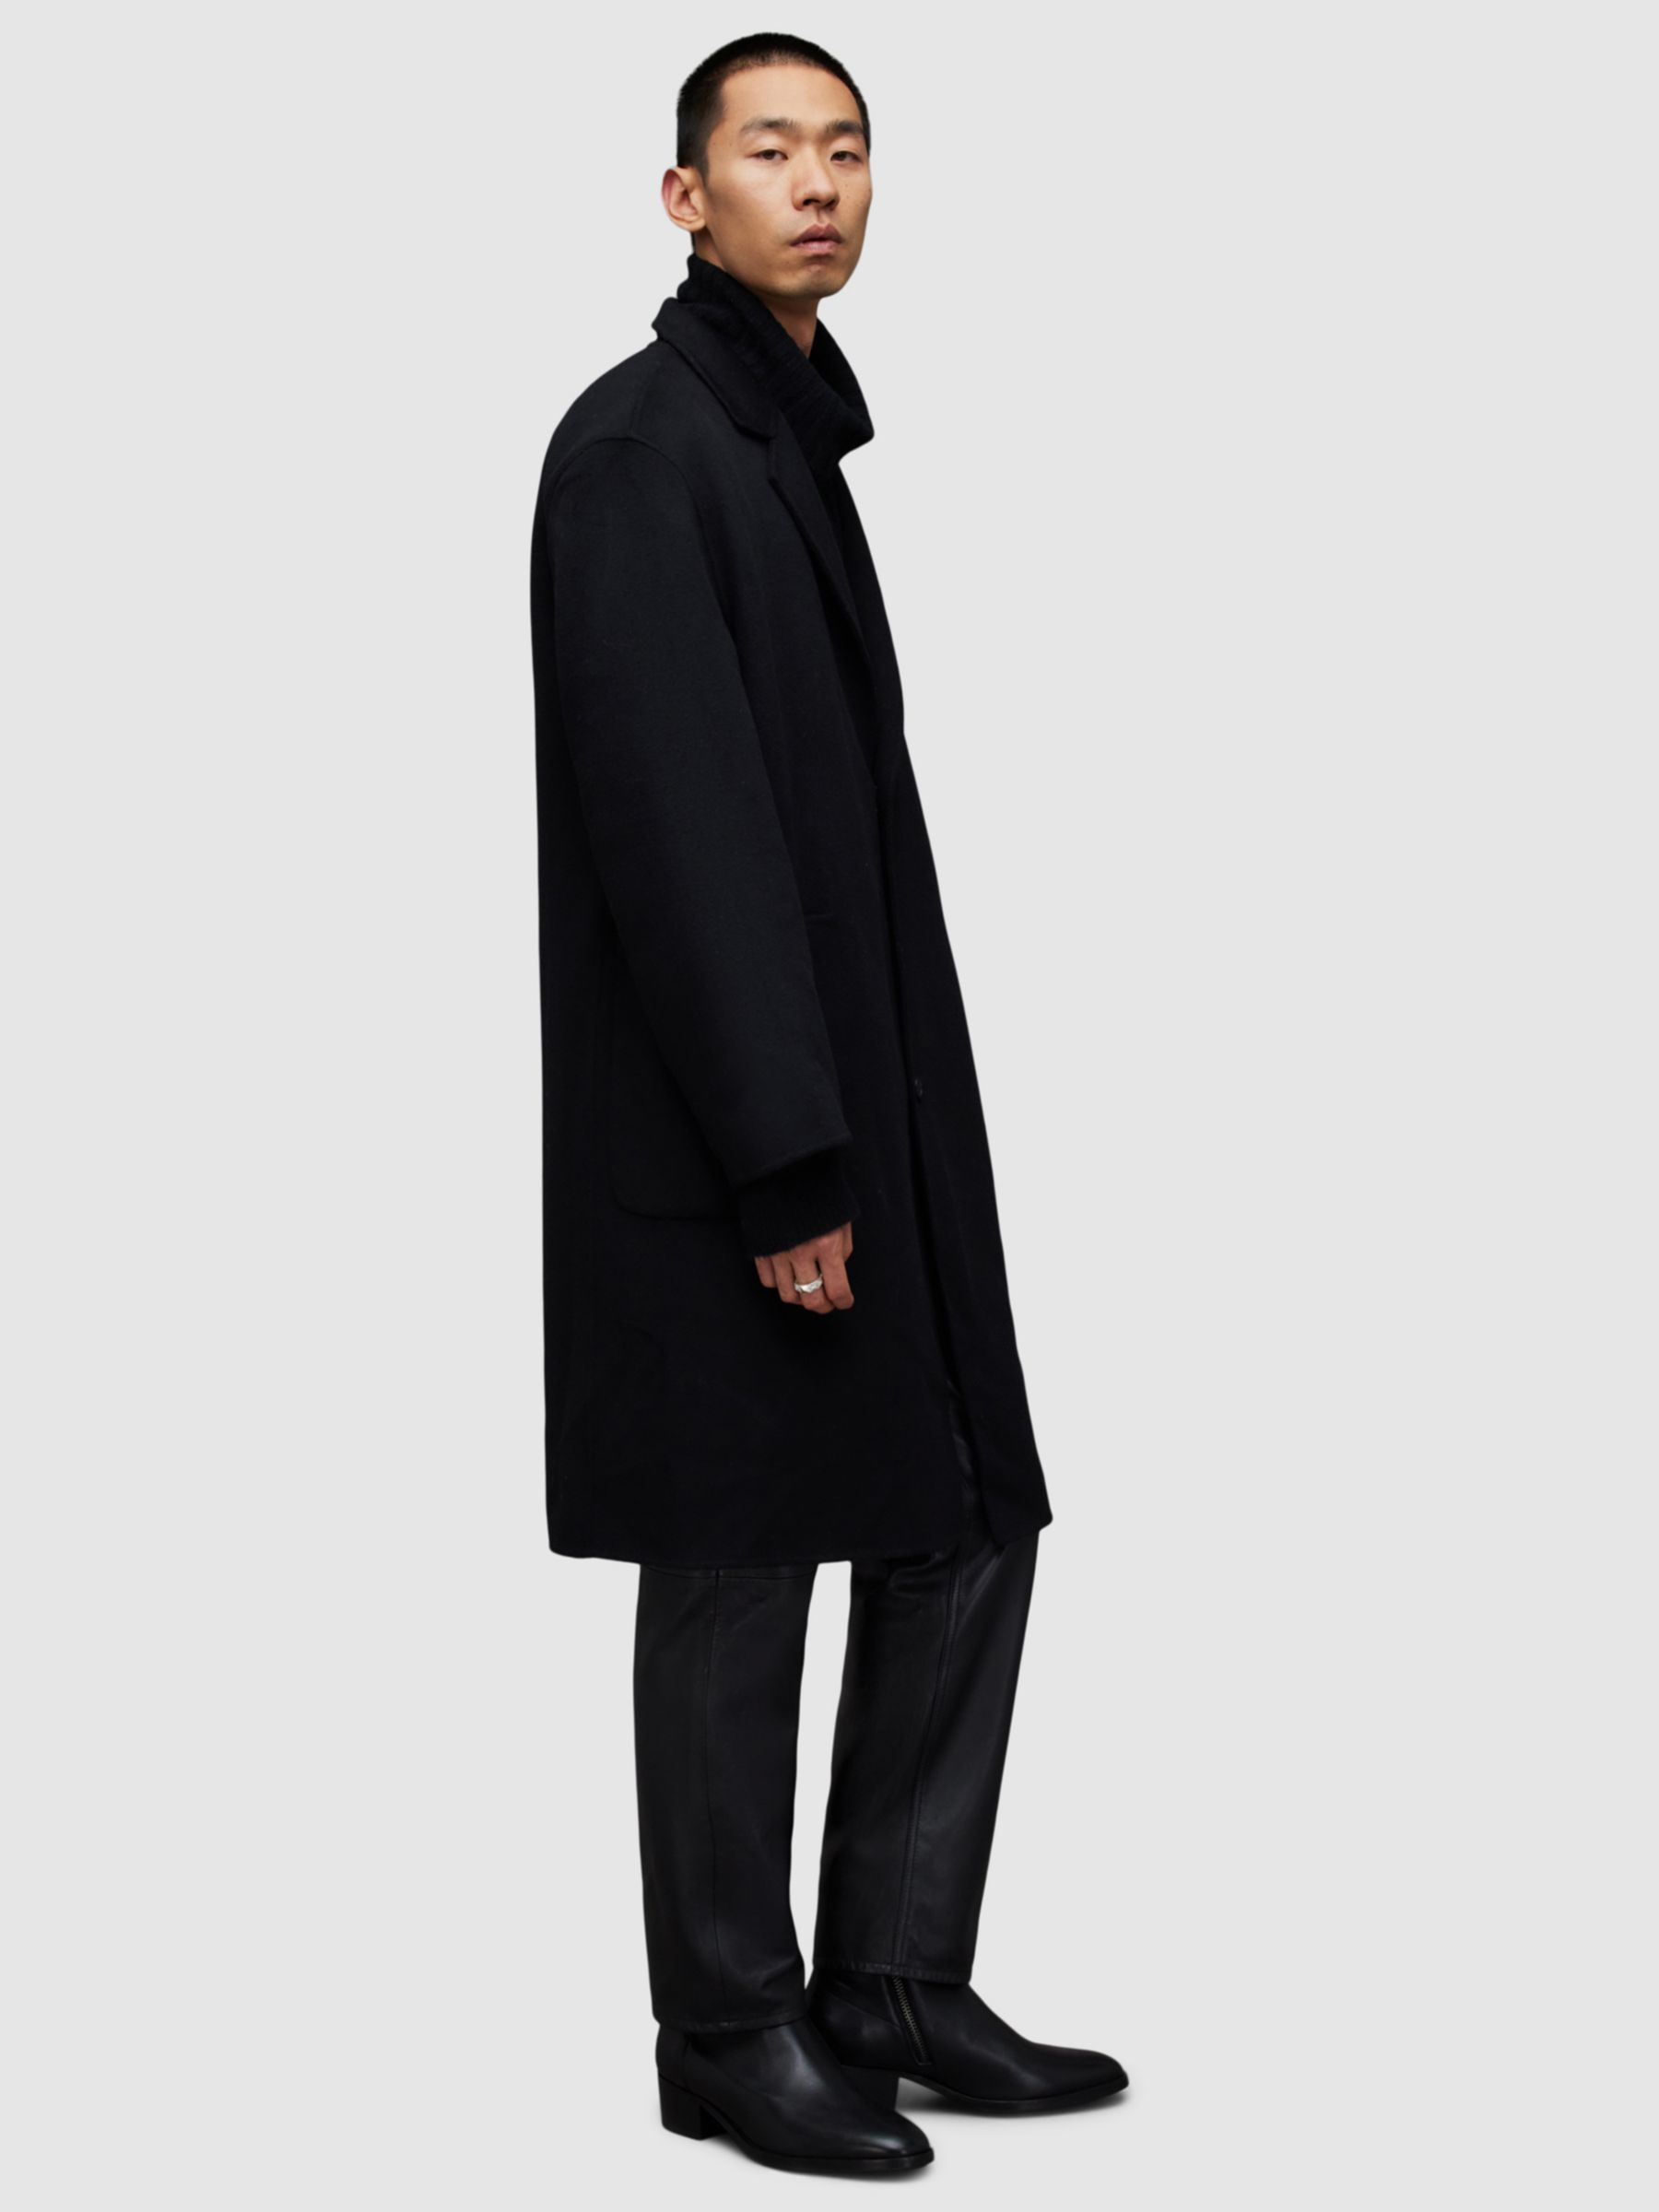 AllSaints Stano Oversize Wool Blend Coat, Black at John Lewis & Partners